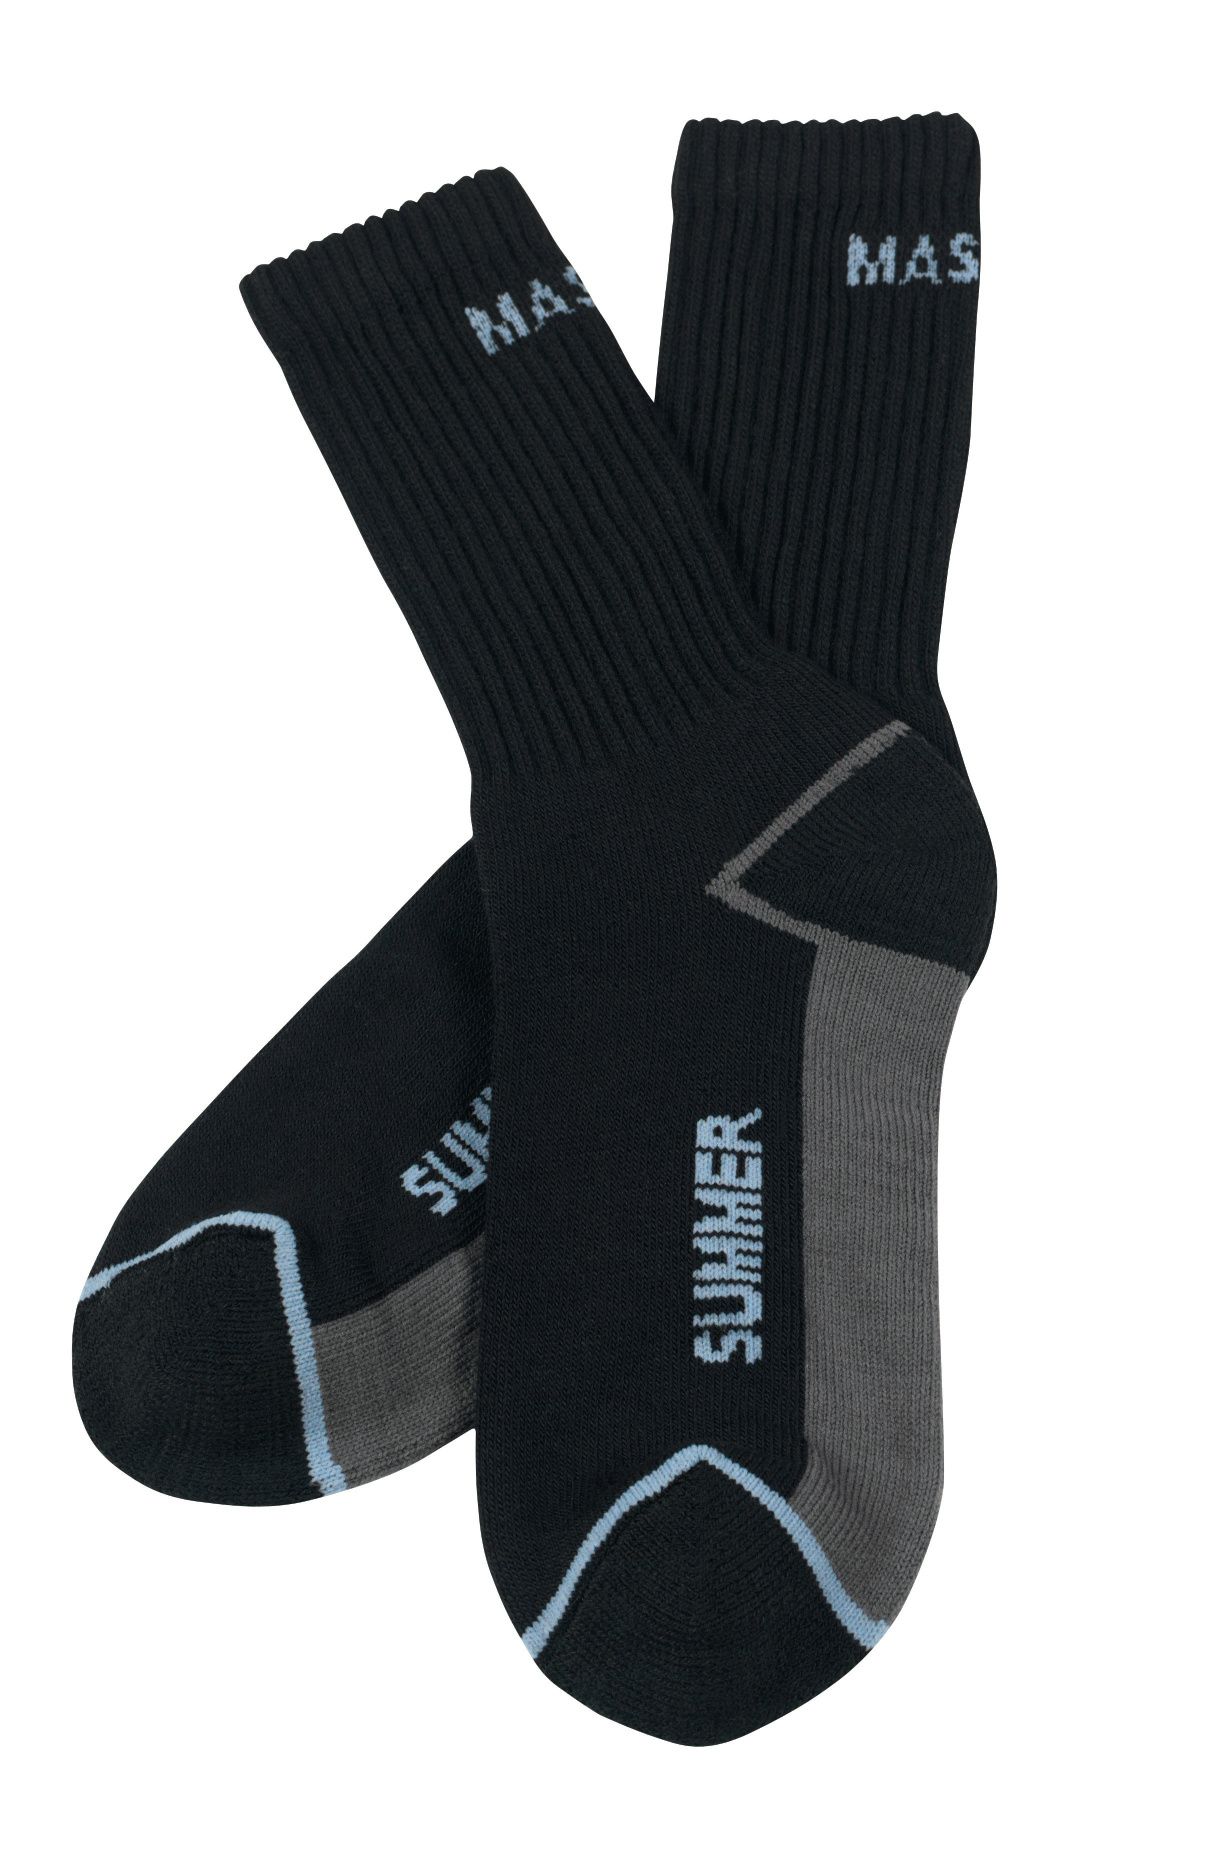 MASCOT Compete Socken "Manica" Nr. 50453-912-09